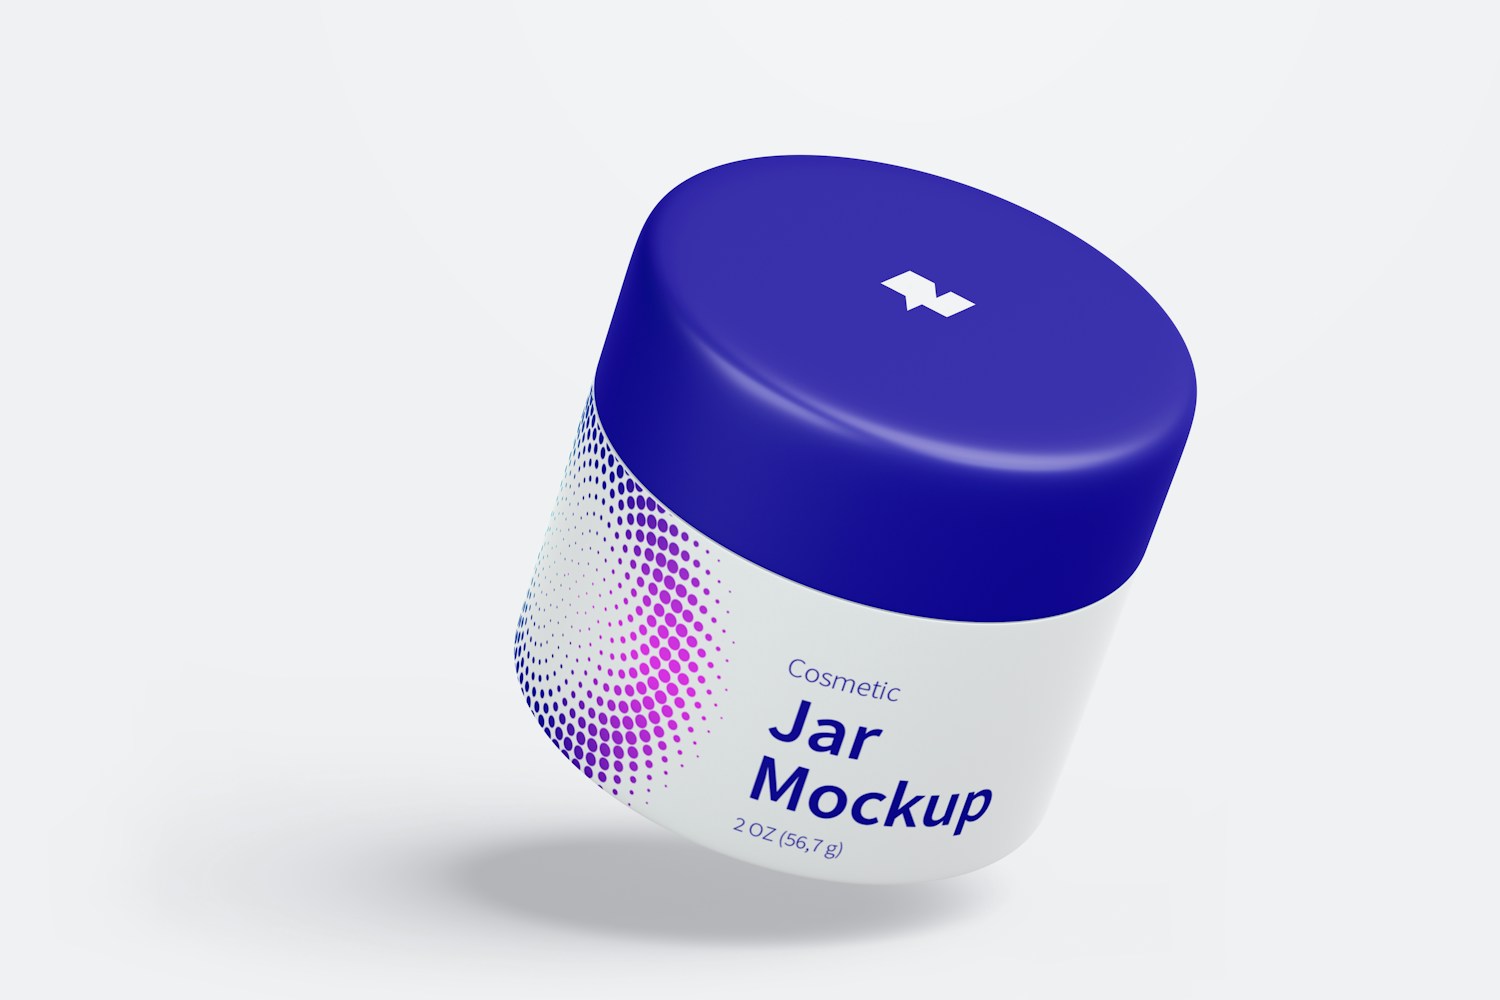 Cosmetic Jar Mockup, Floating